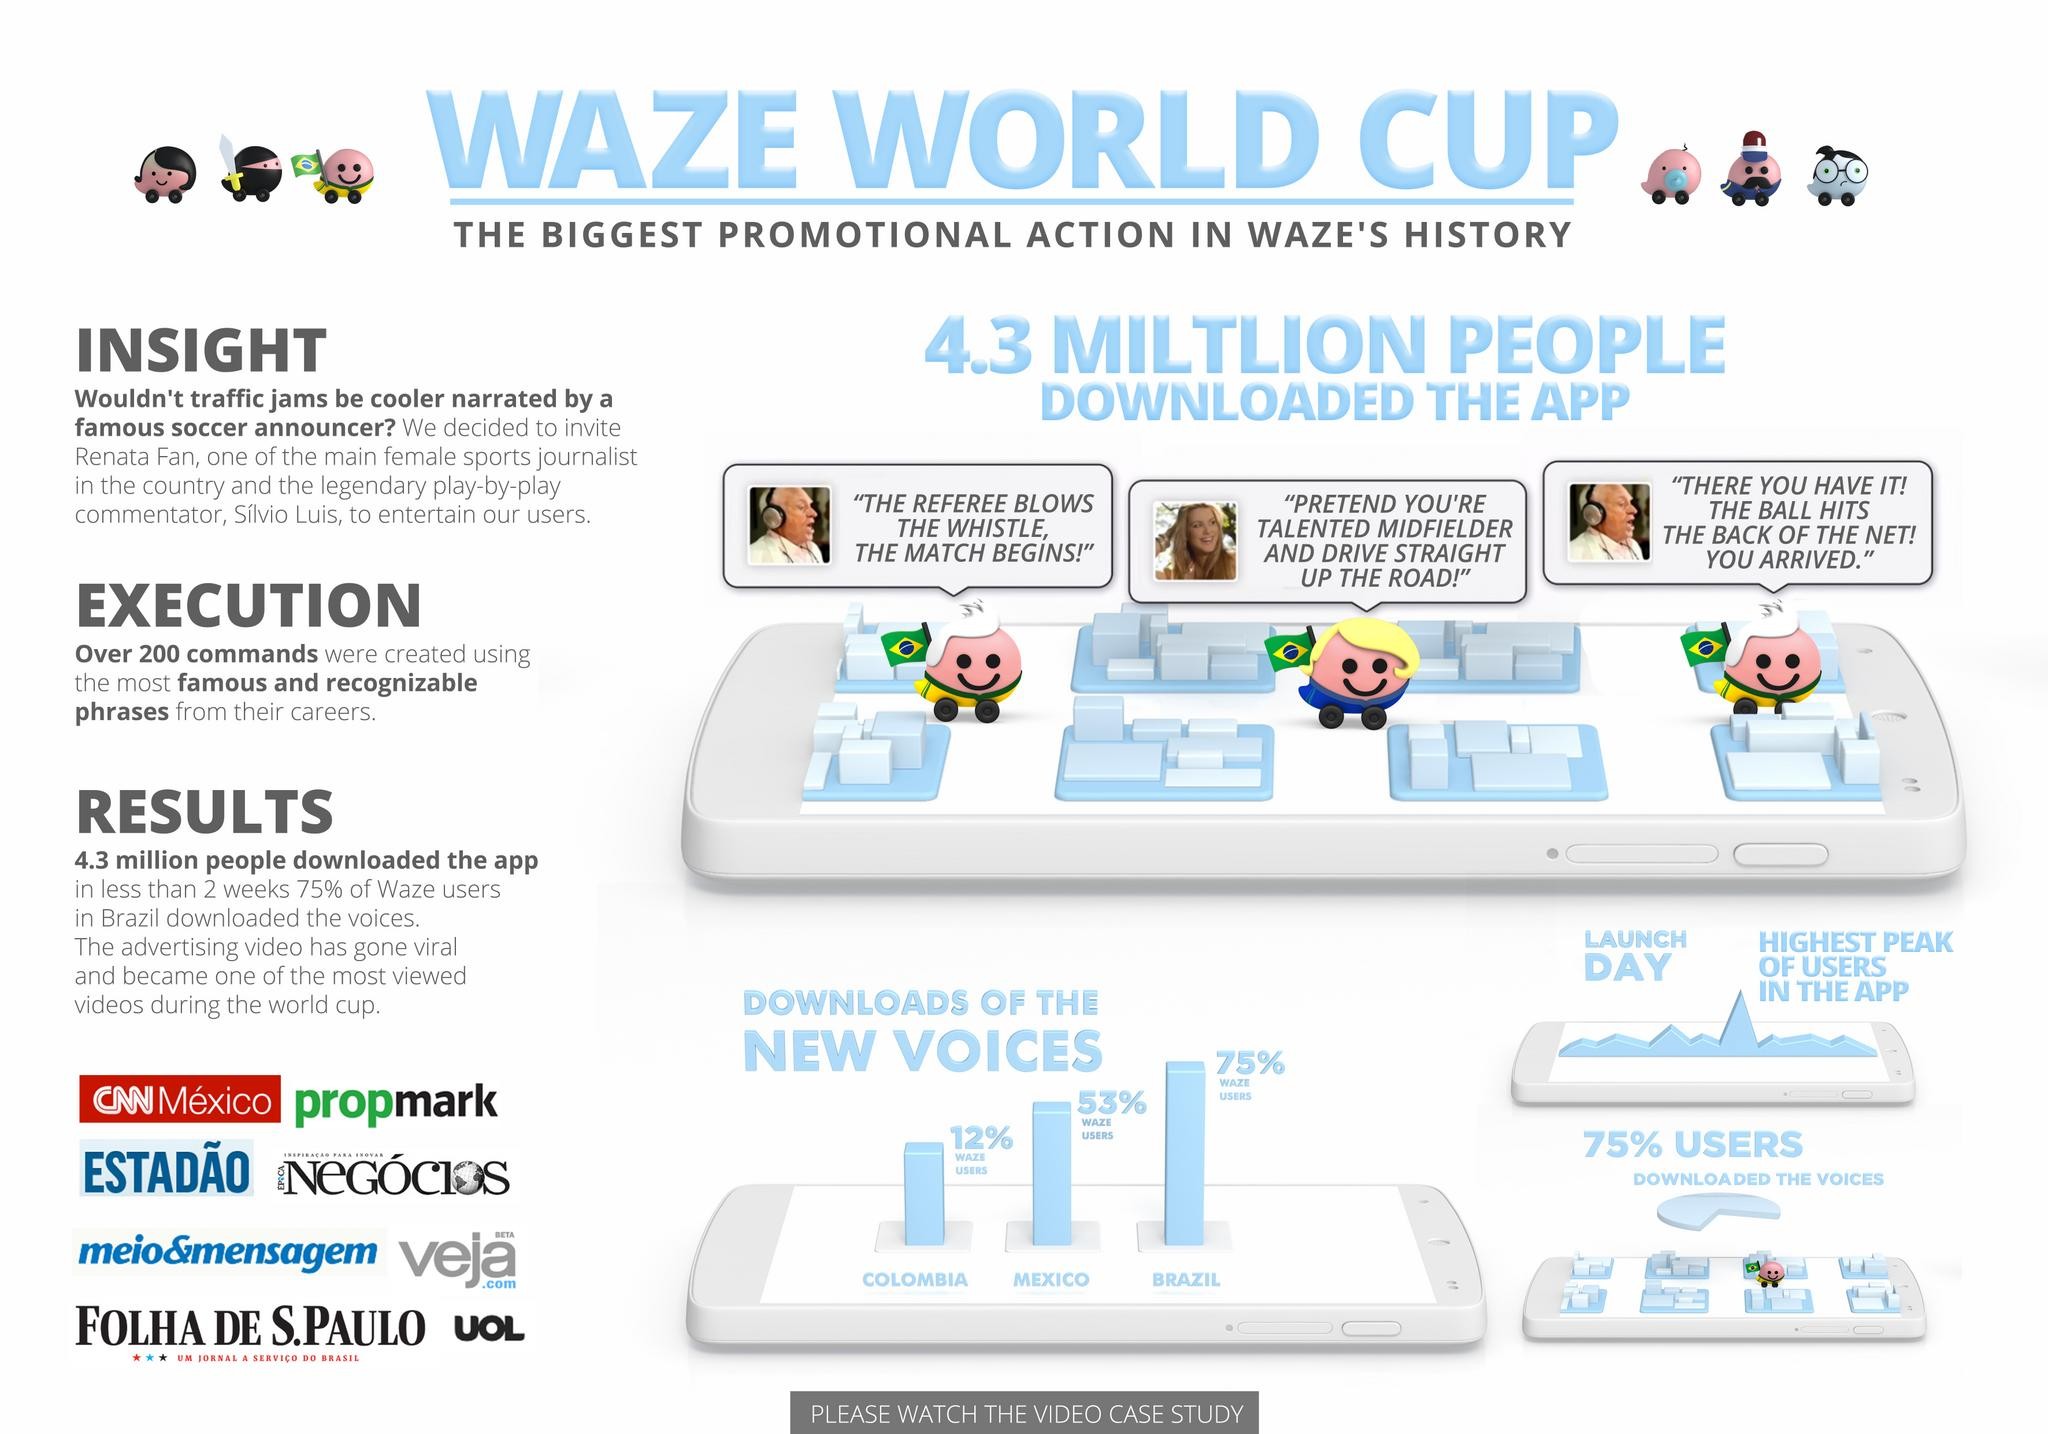 WAZE WORLD CUP